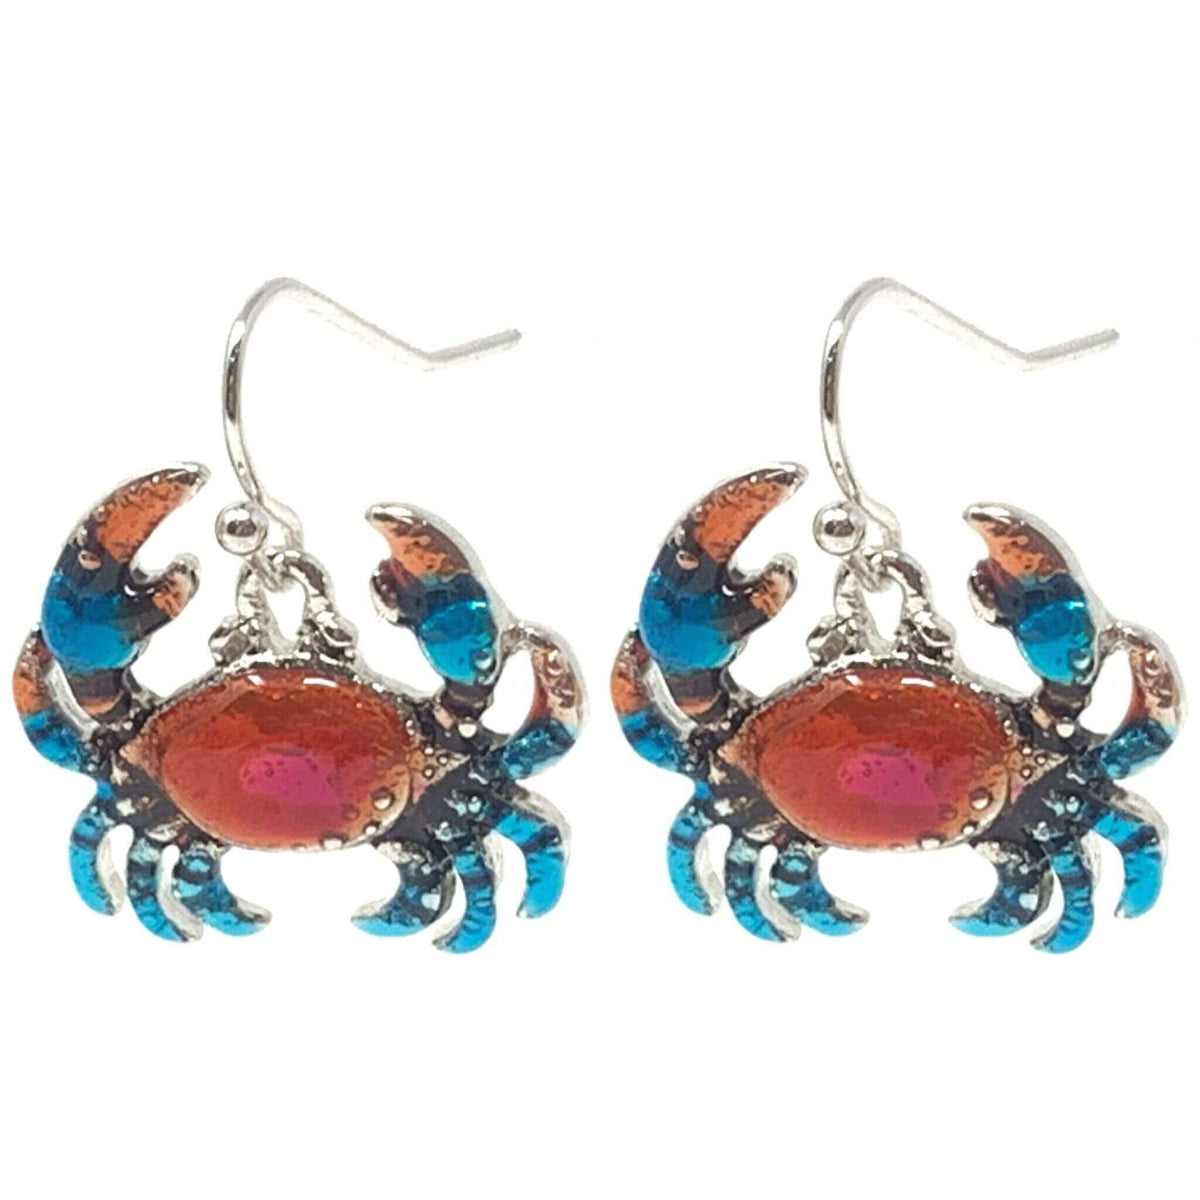 Dangling Crab Earrings - Beach Jewelry - Length 1